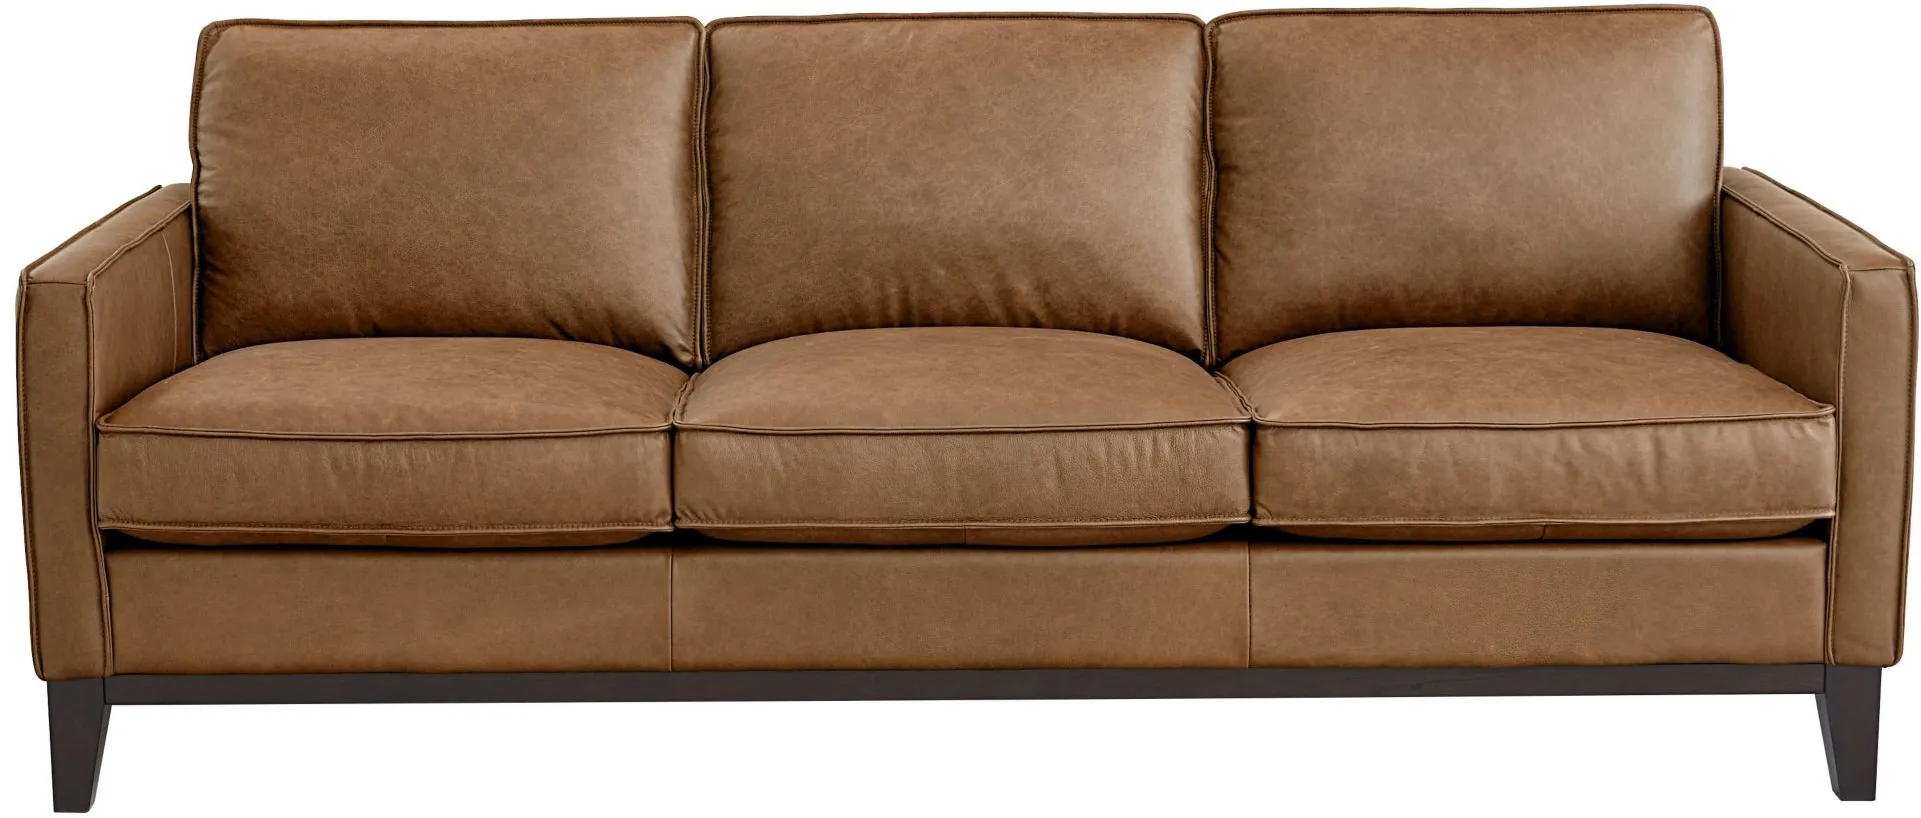 gtr leather inc laguna leather sofa